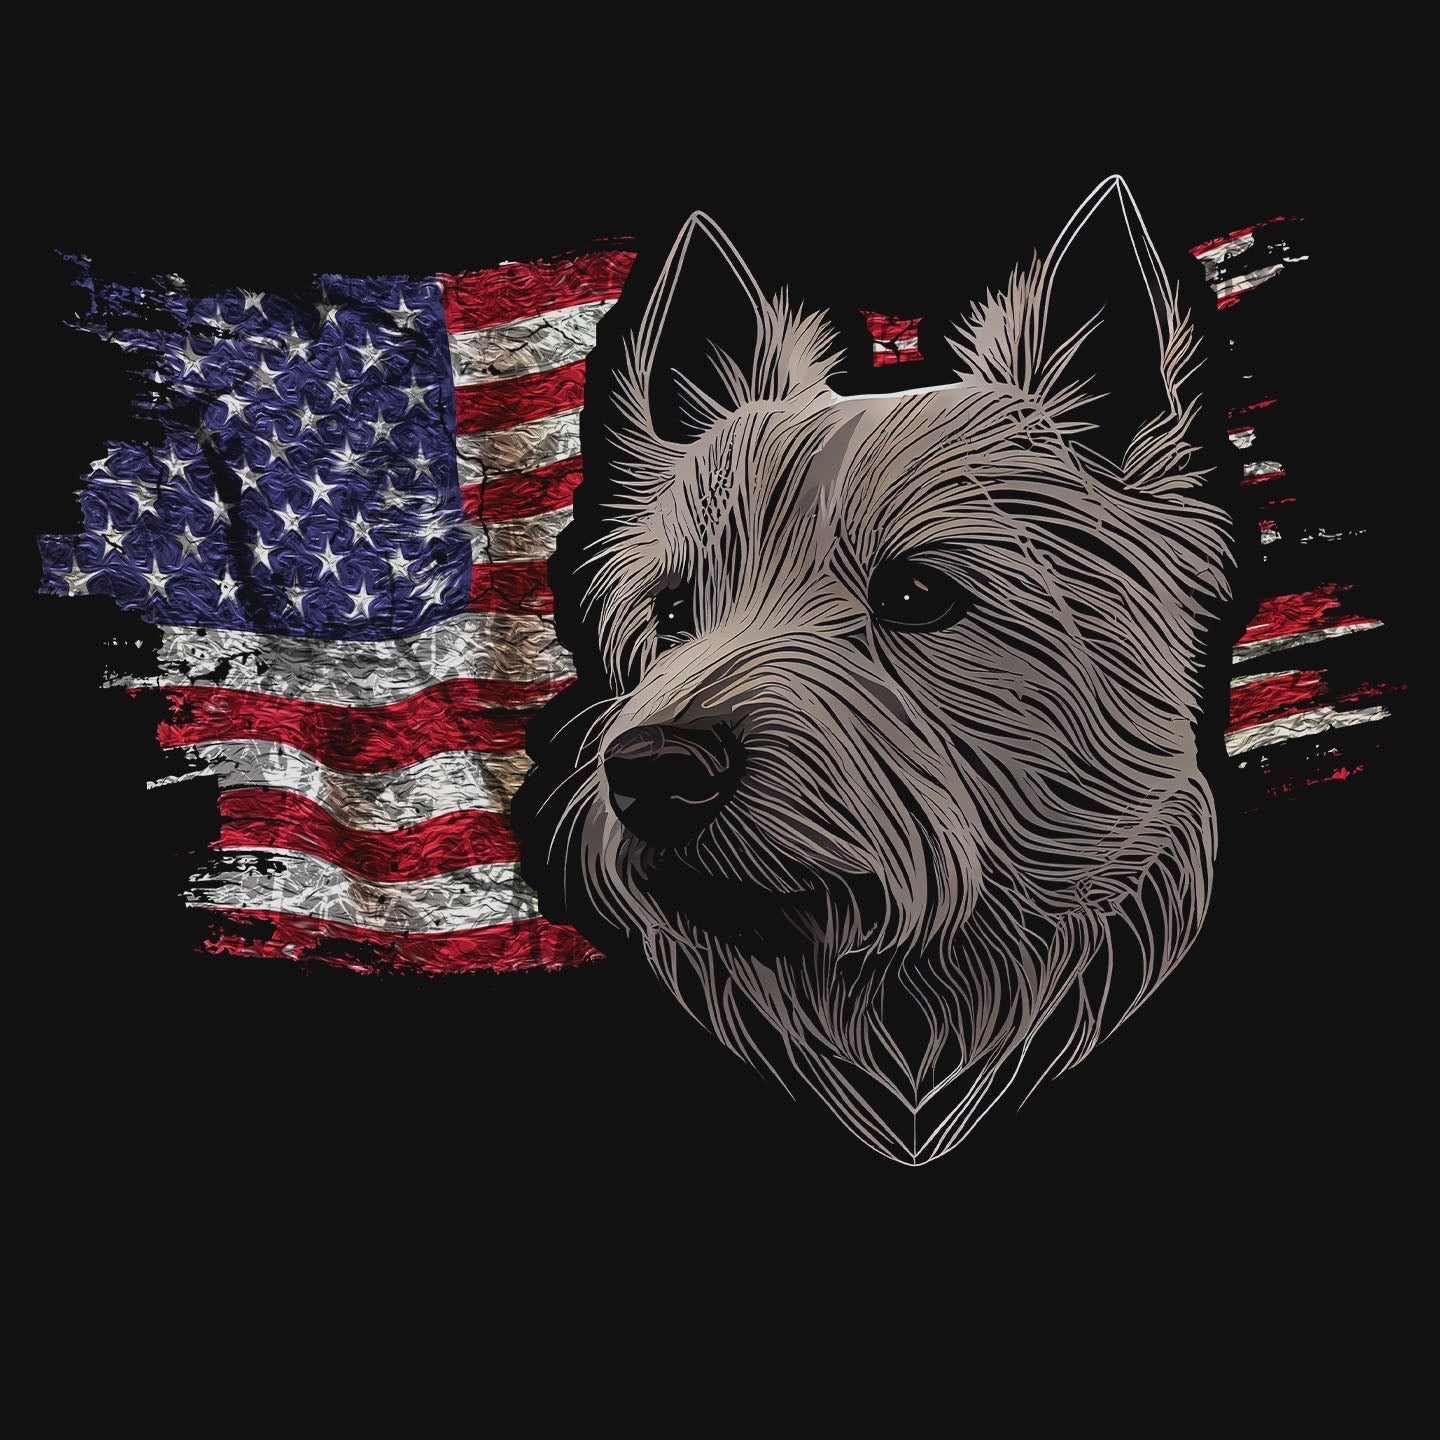 Patriotic Norwich Terrier American Flag - Women's V-Neck T-Shirt